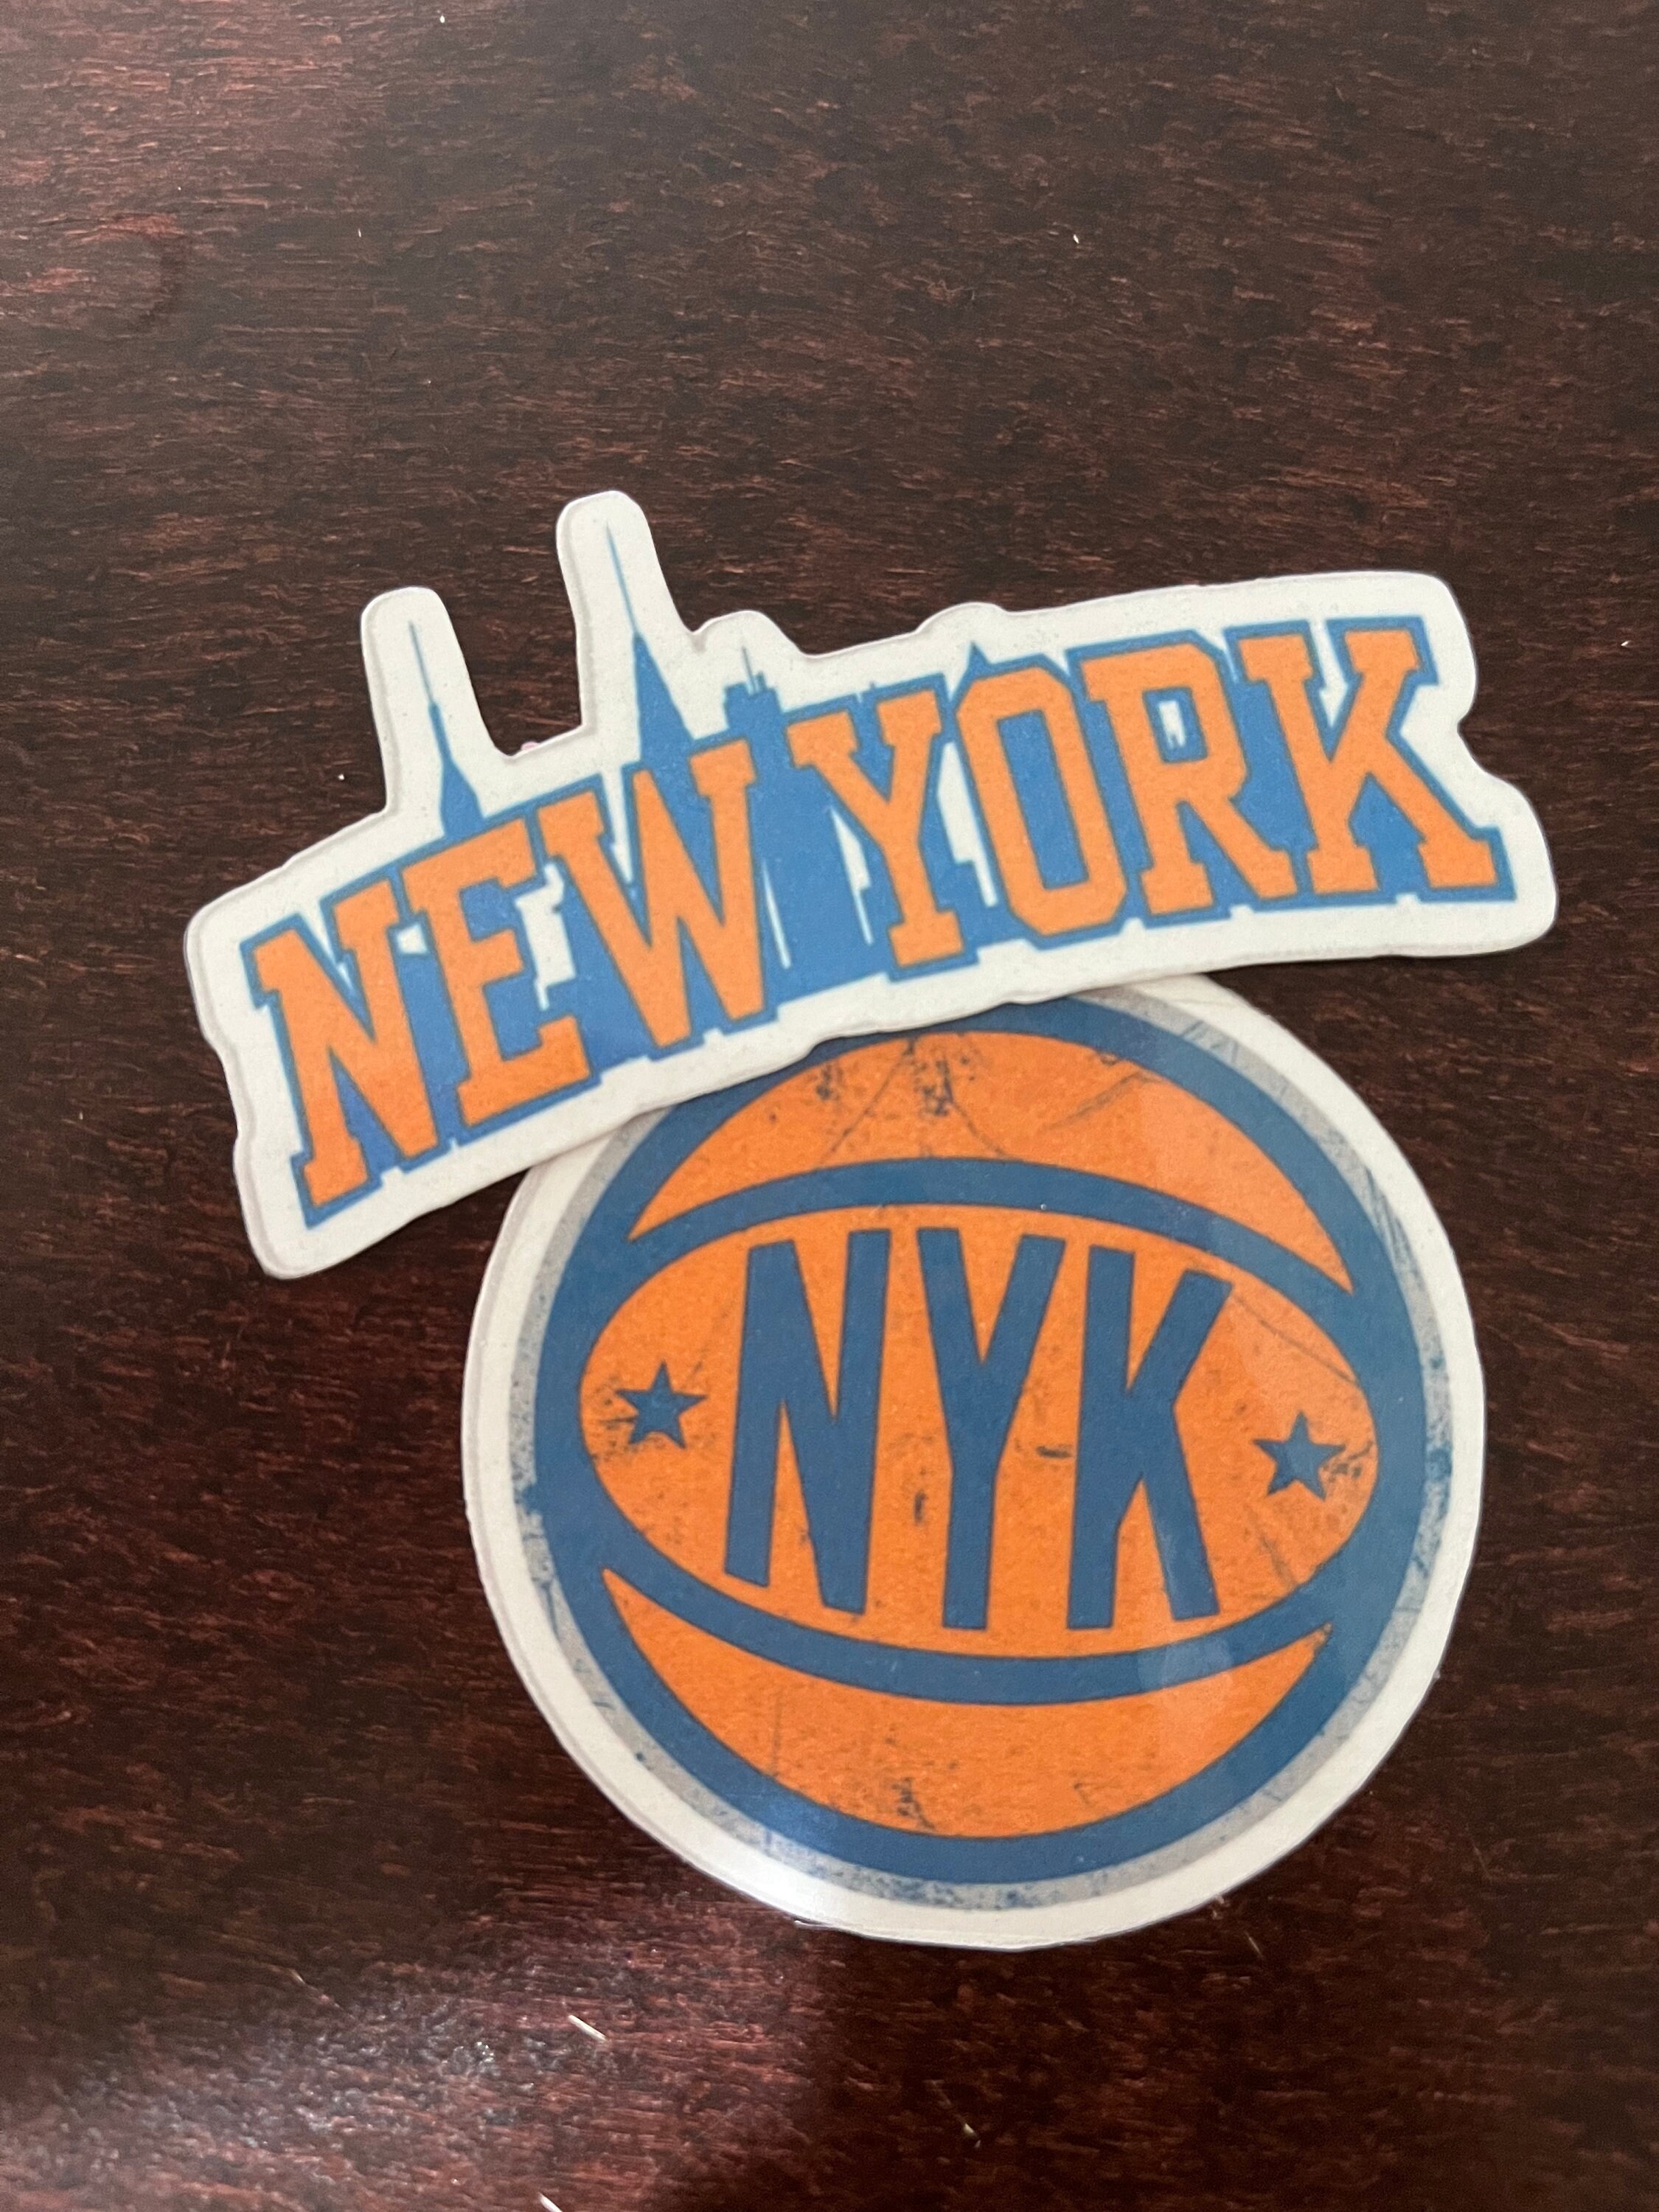 Battle for New York Wu Tang GZA Knicks Nets Mashup Sticker -  Canada